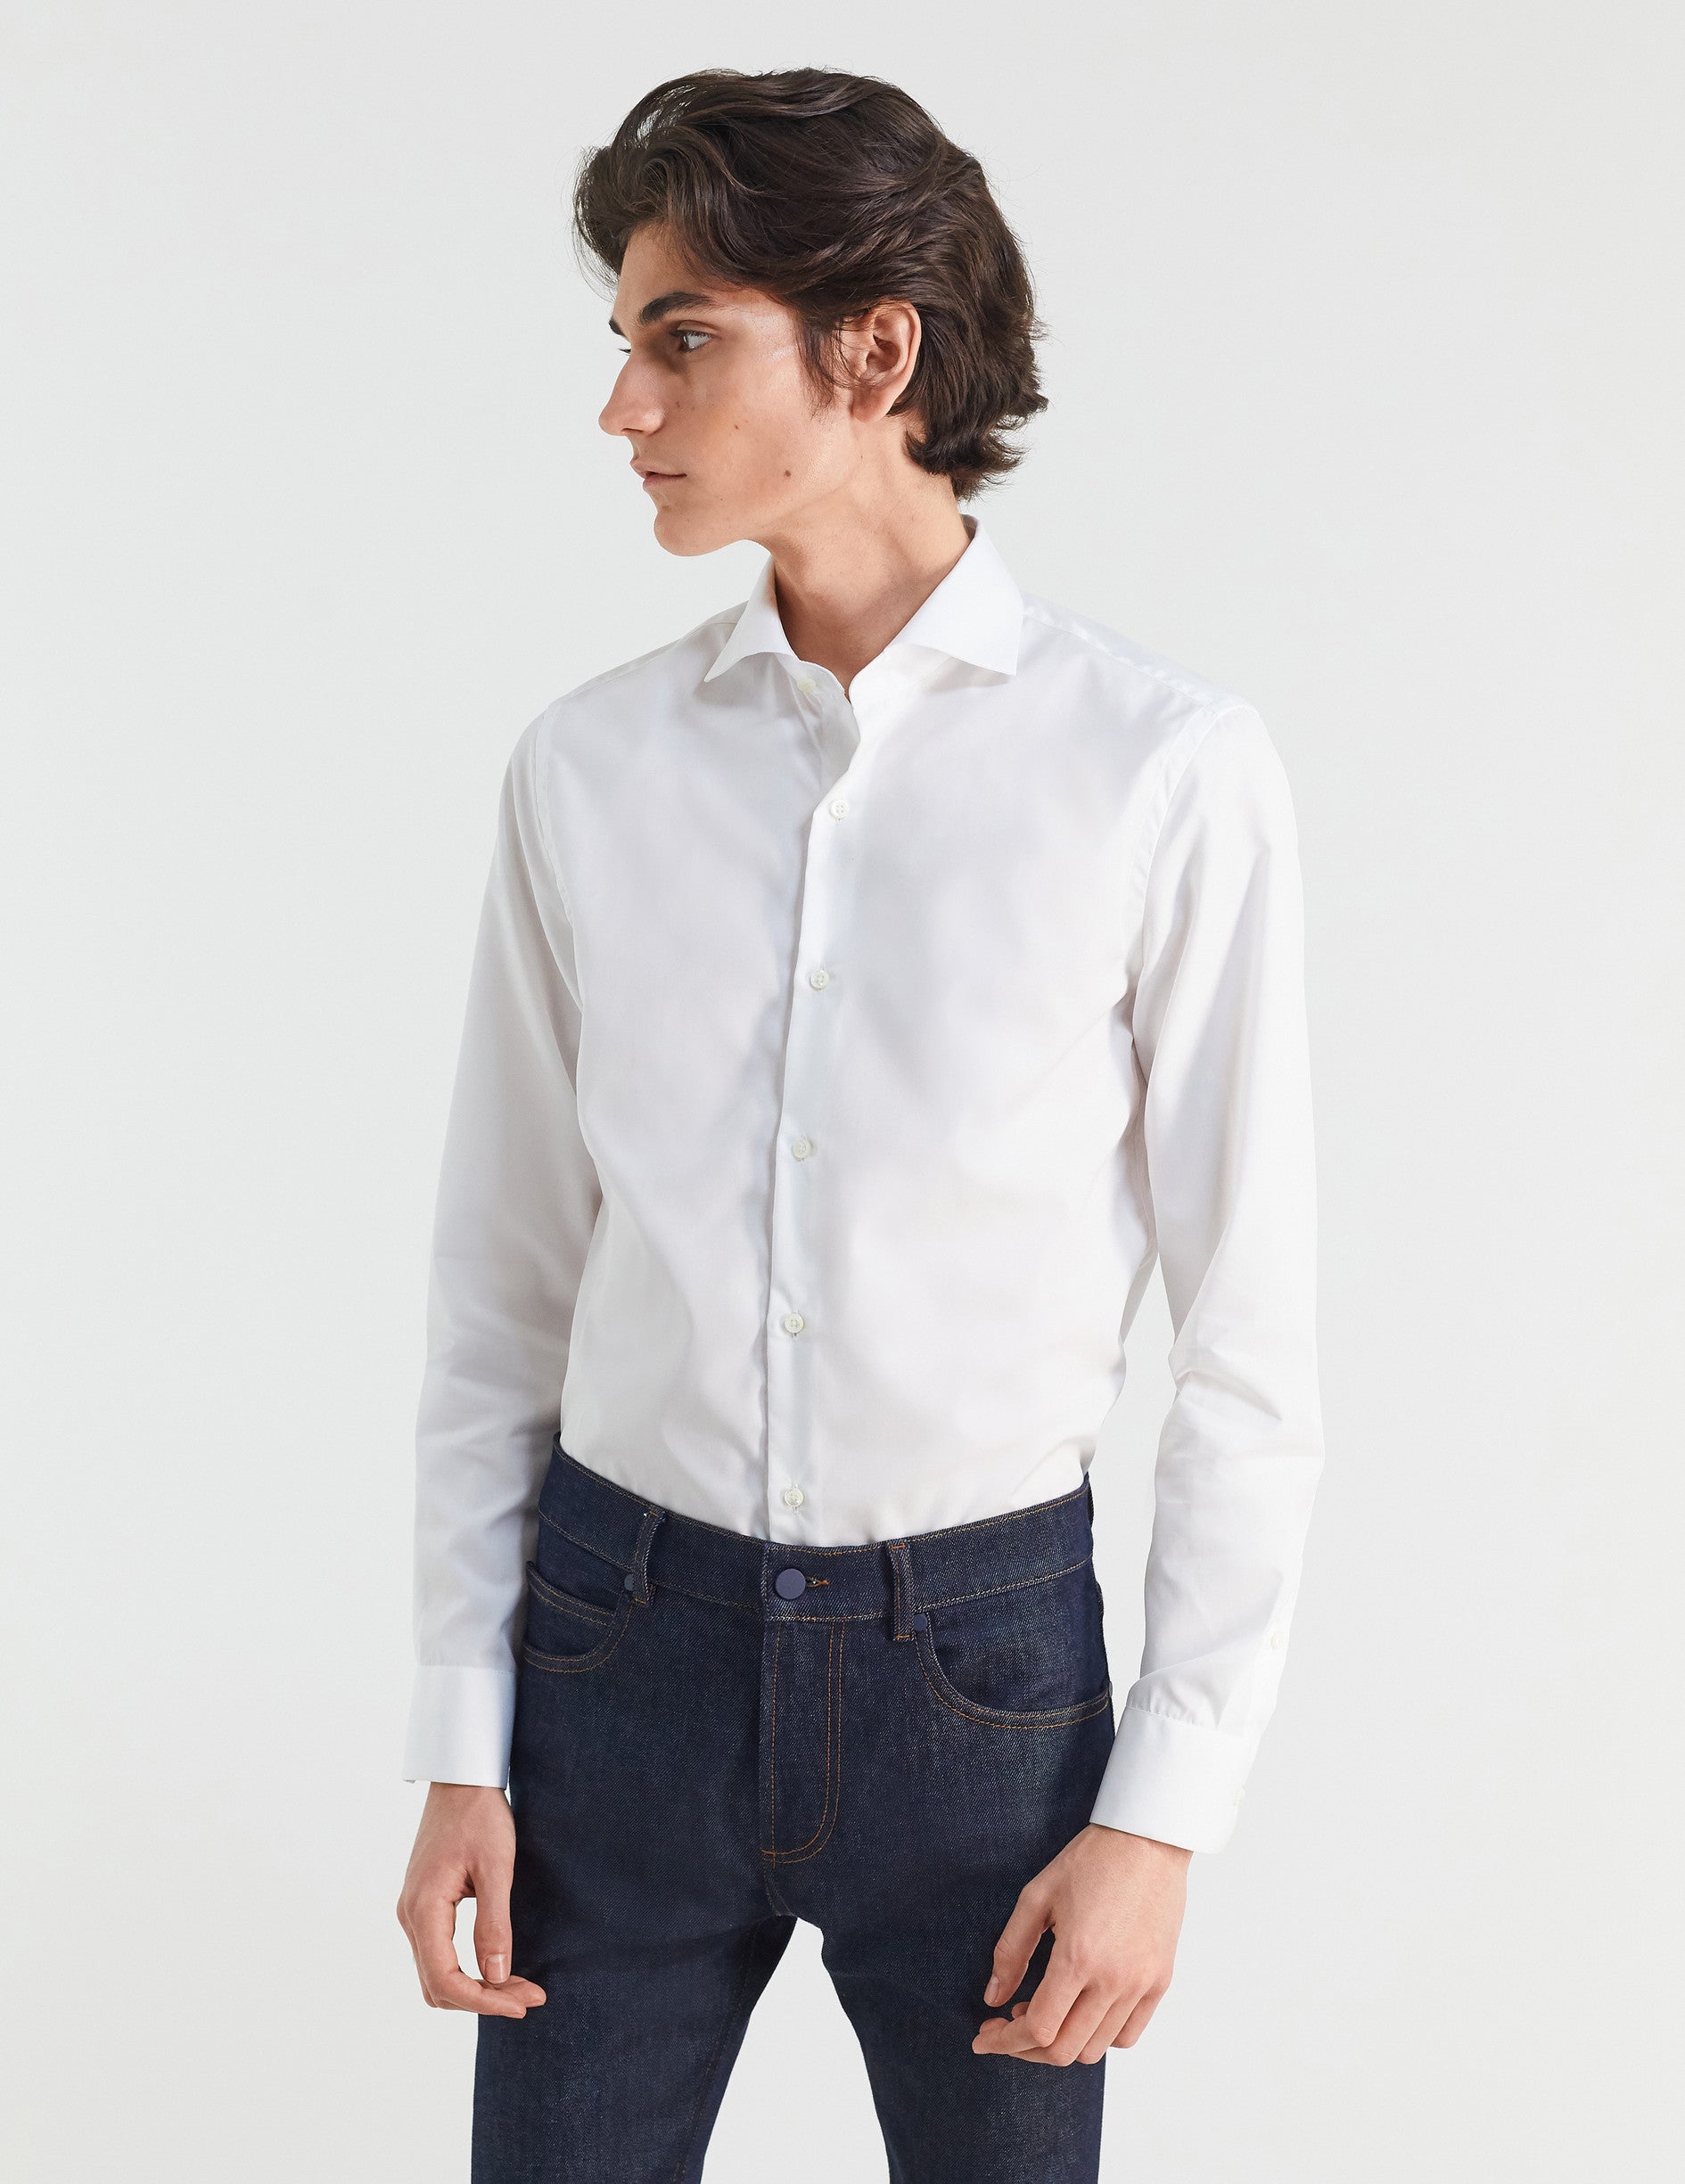 White Wrinkle-Resistant Fitted Shirt - Poplin - Italian Collar